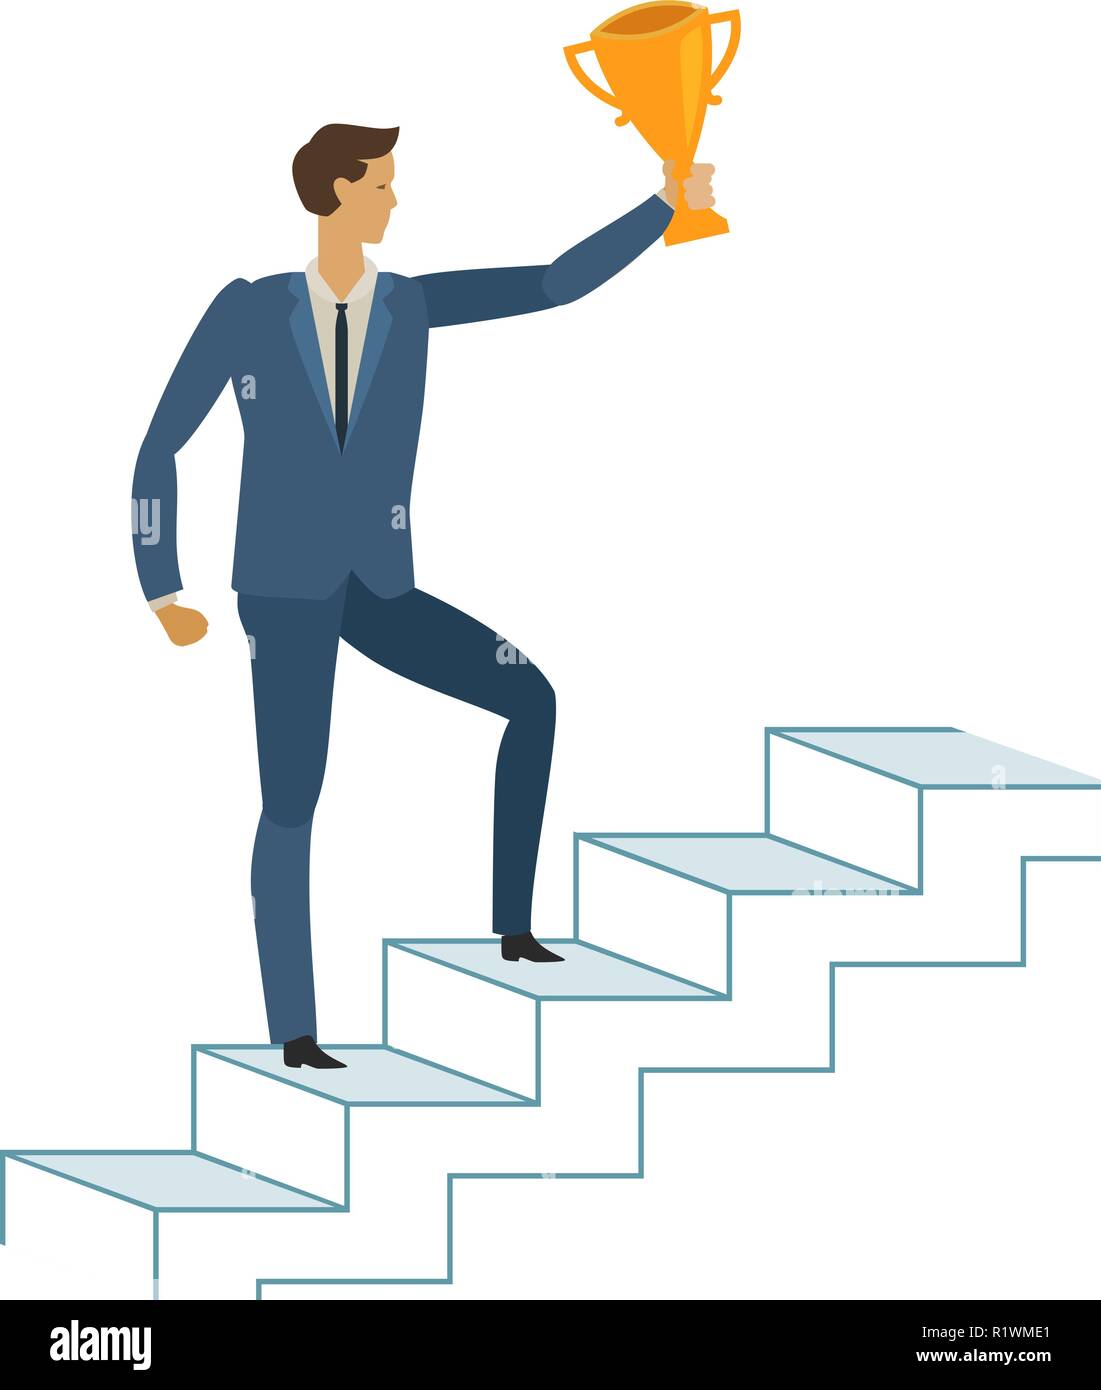 Man is climbing career ladder. Business concept. Vector illustration Stock Vector